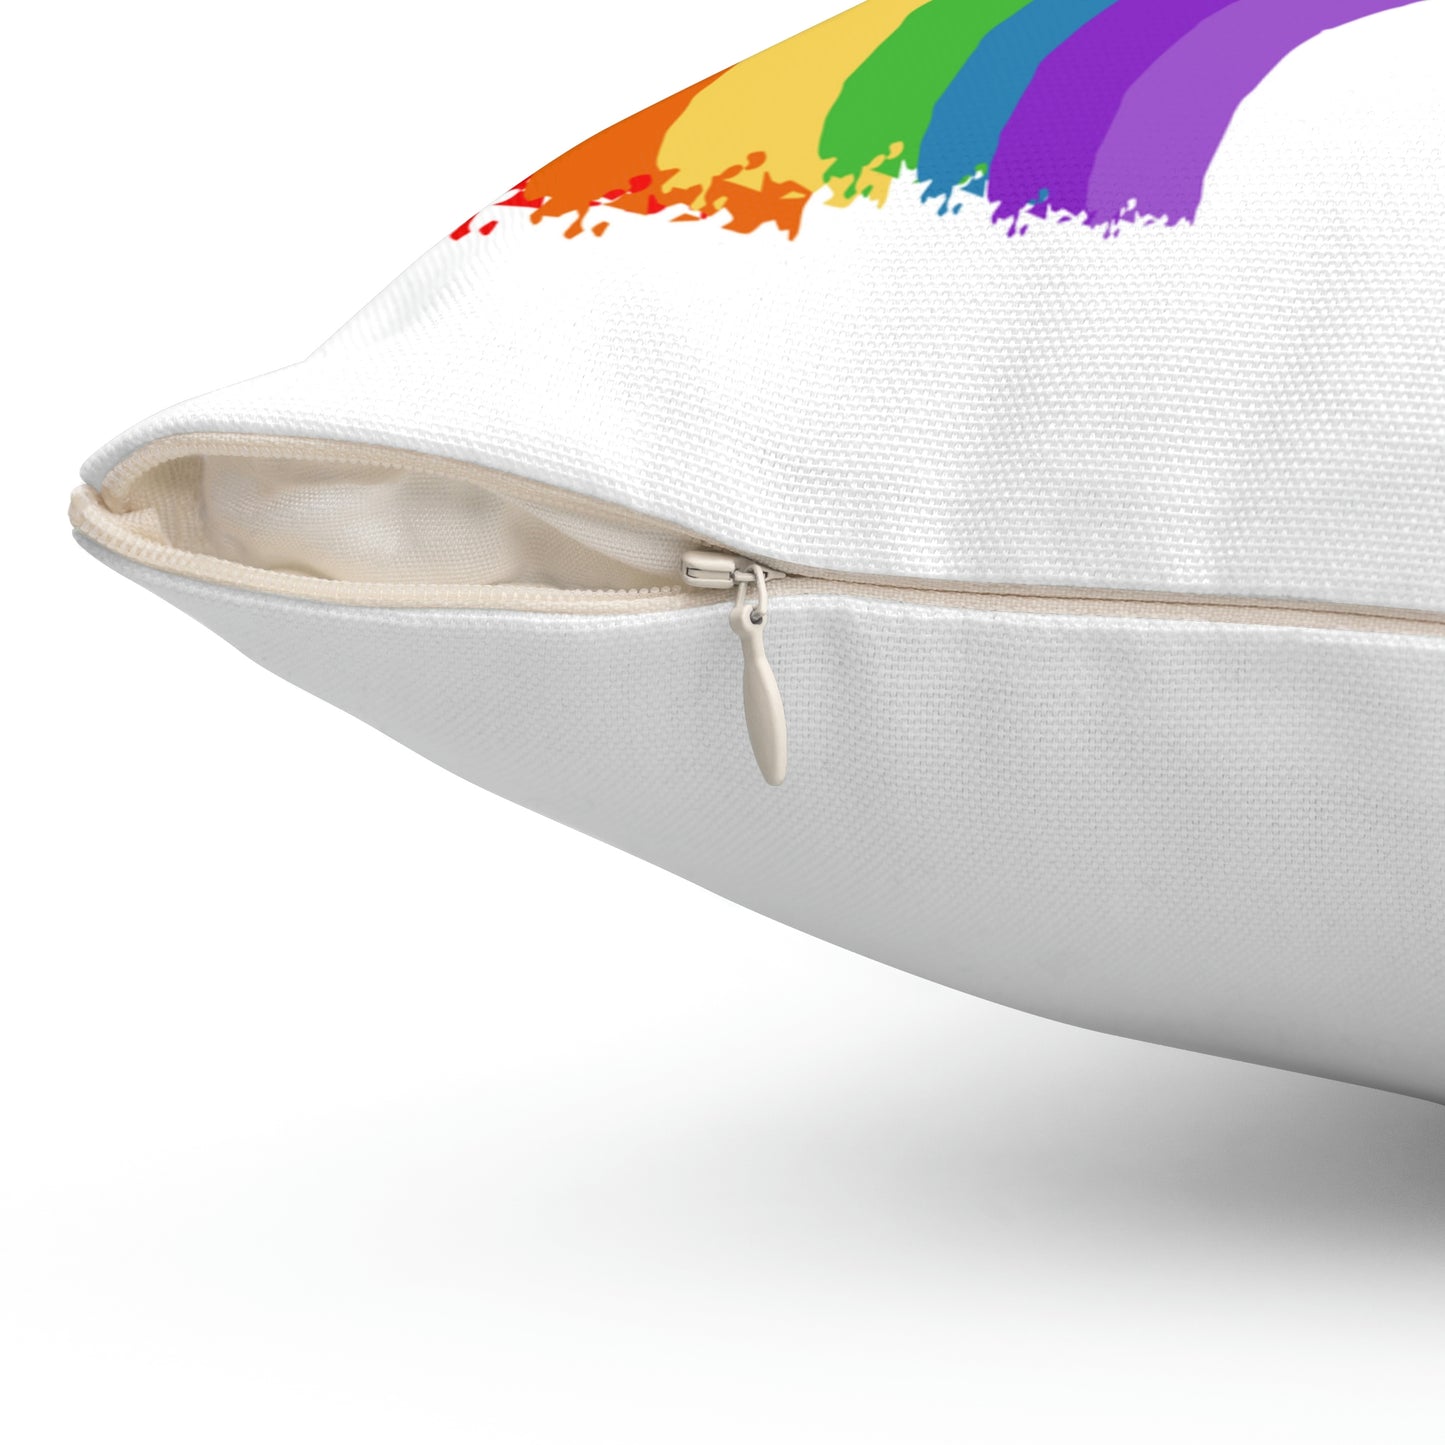 Rainbow, Arches, multiple rainbows - Square Pillow